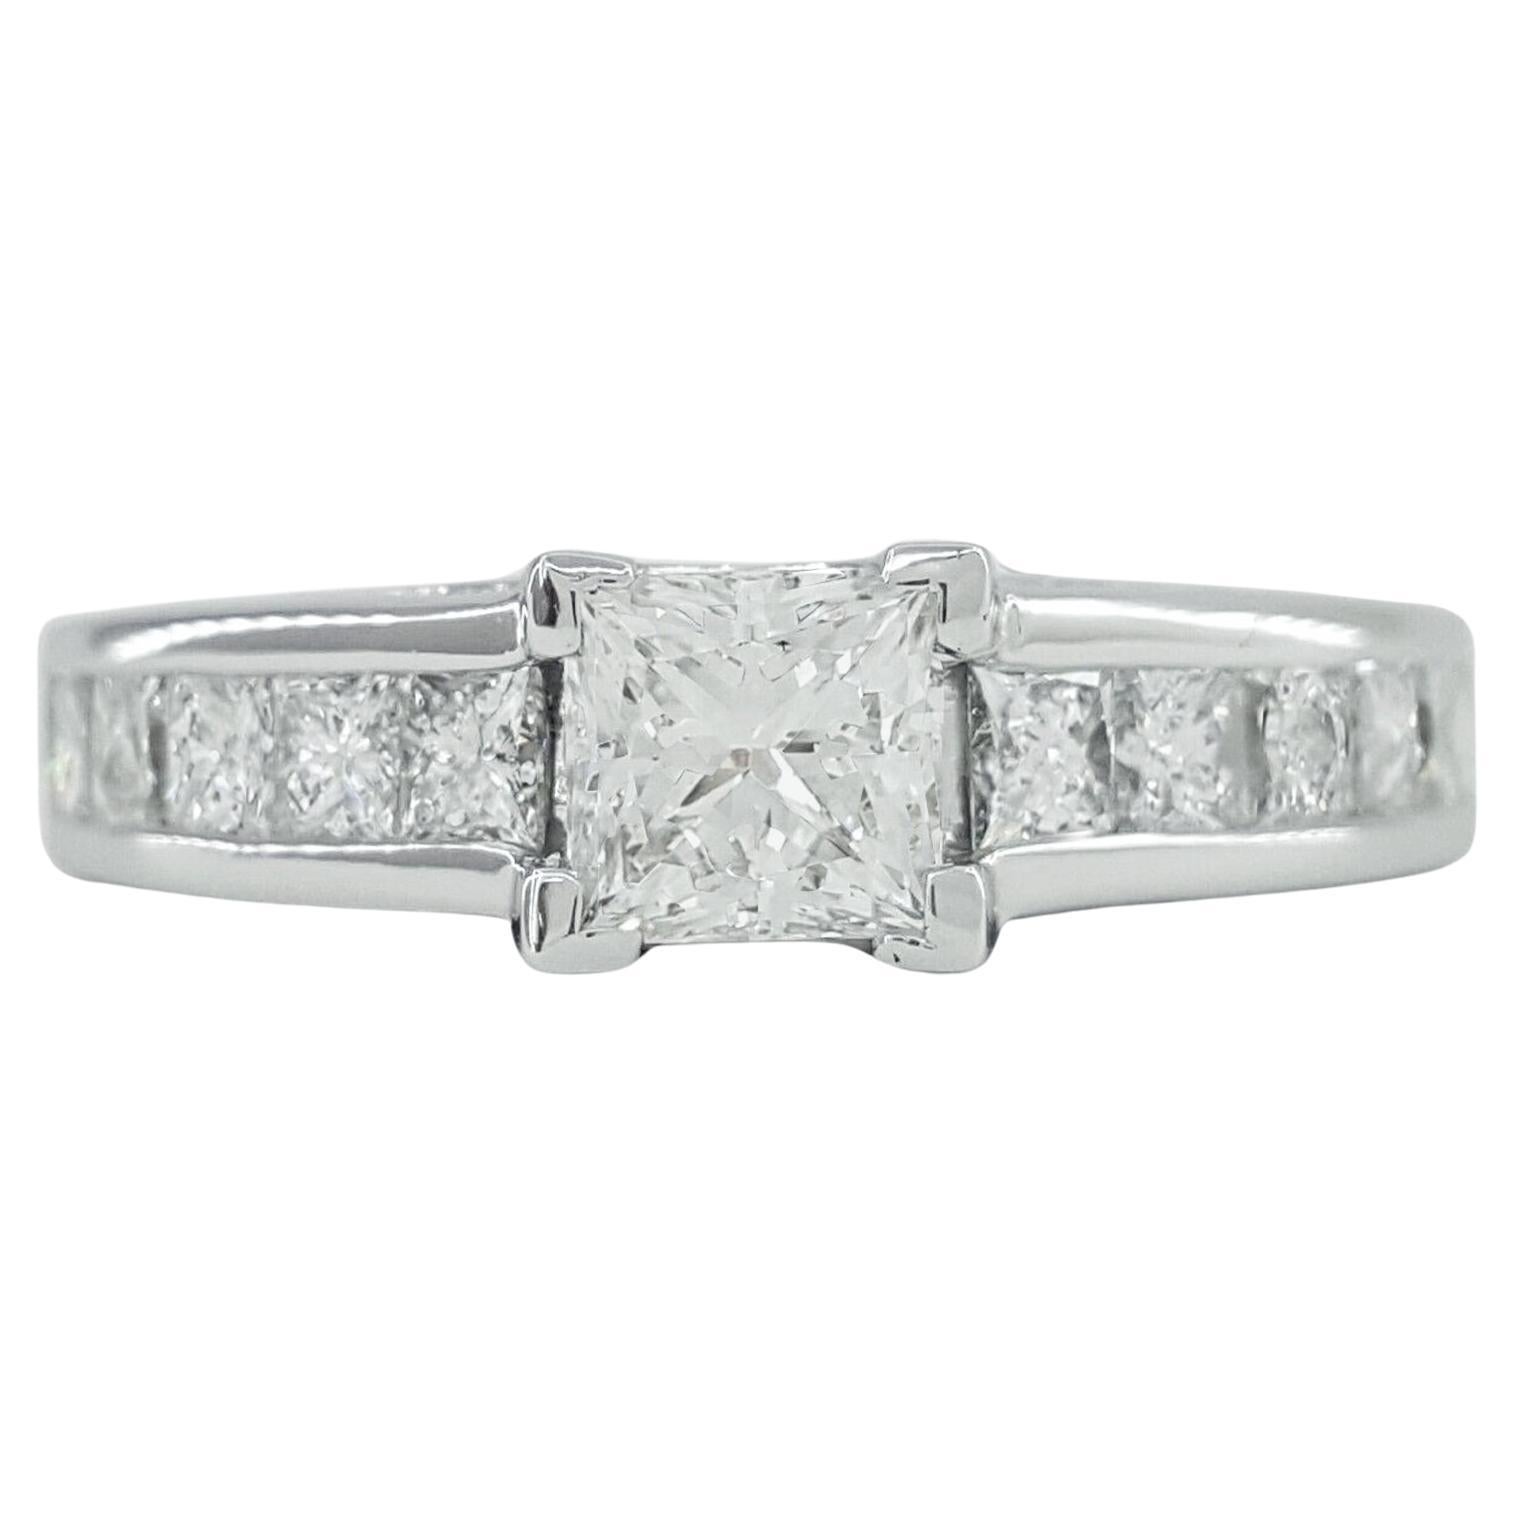 Tacori Diamond Engagement Ring 